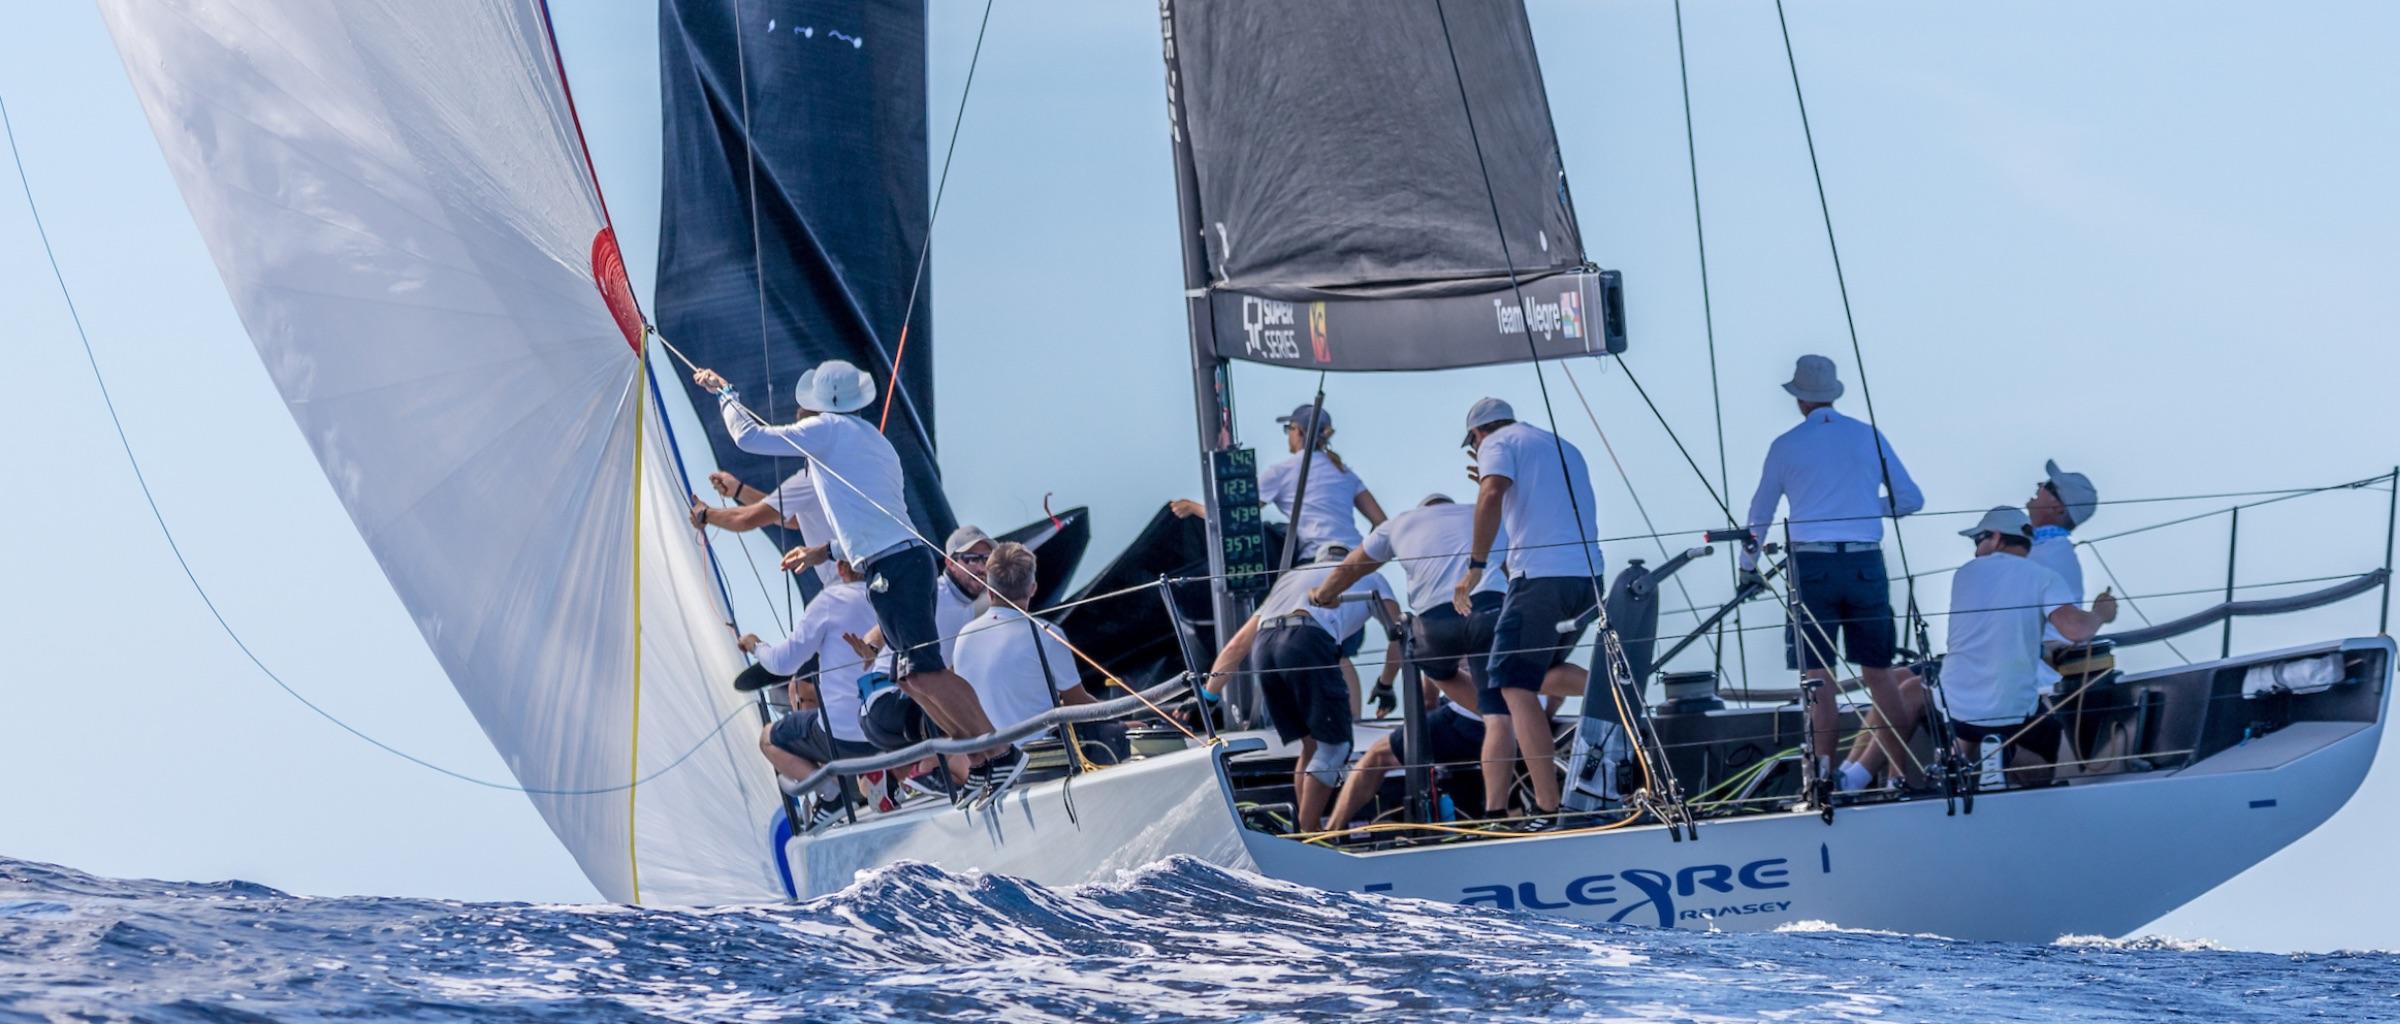 La Menorca 52 Super Series Sailing Week è sempre più Alegre